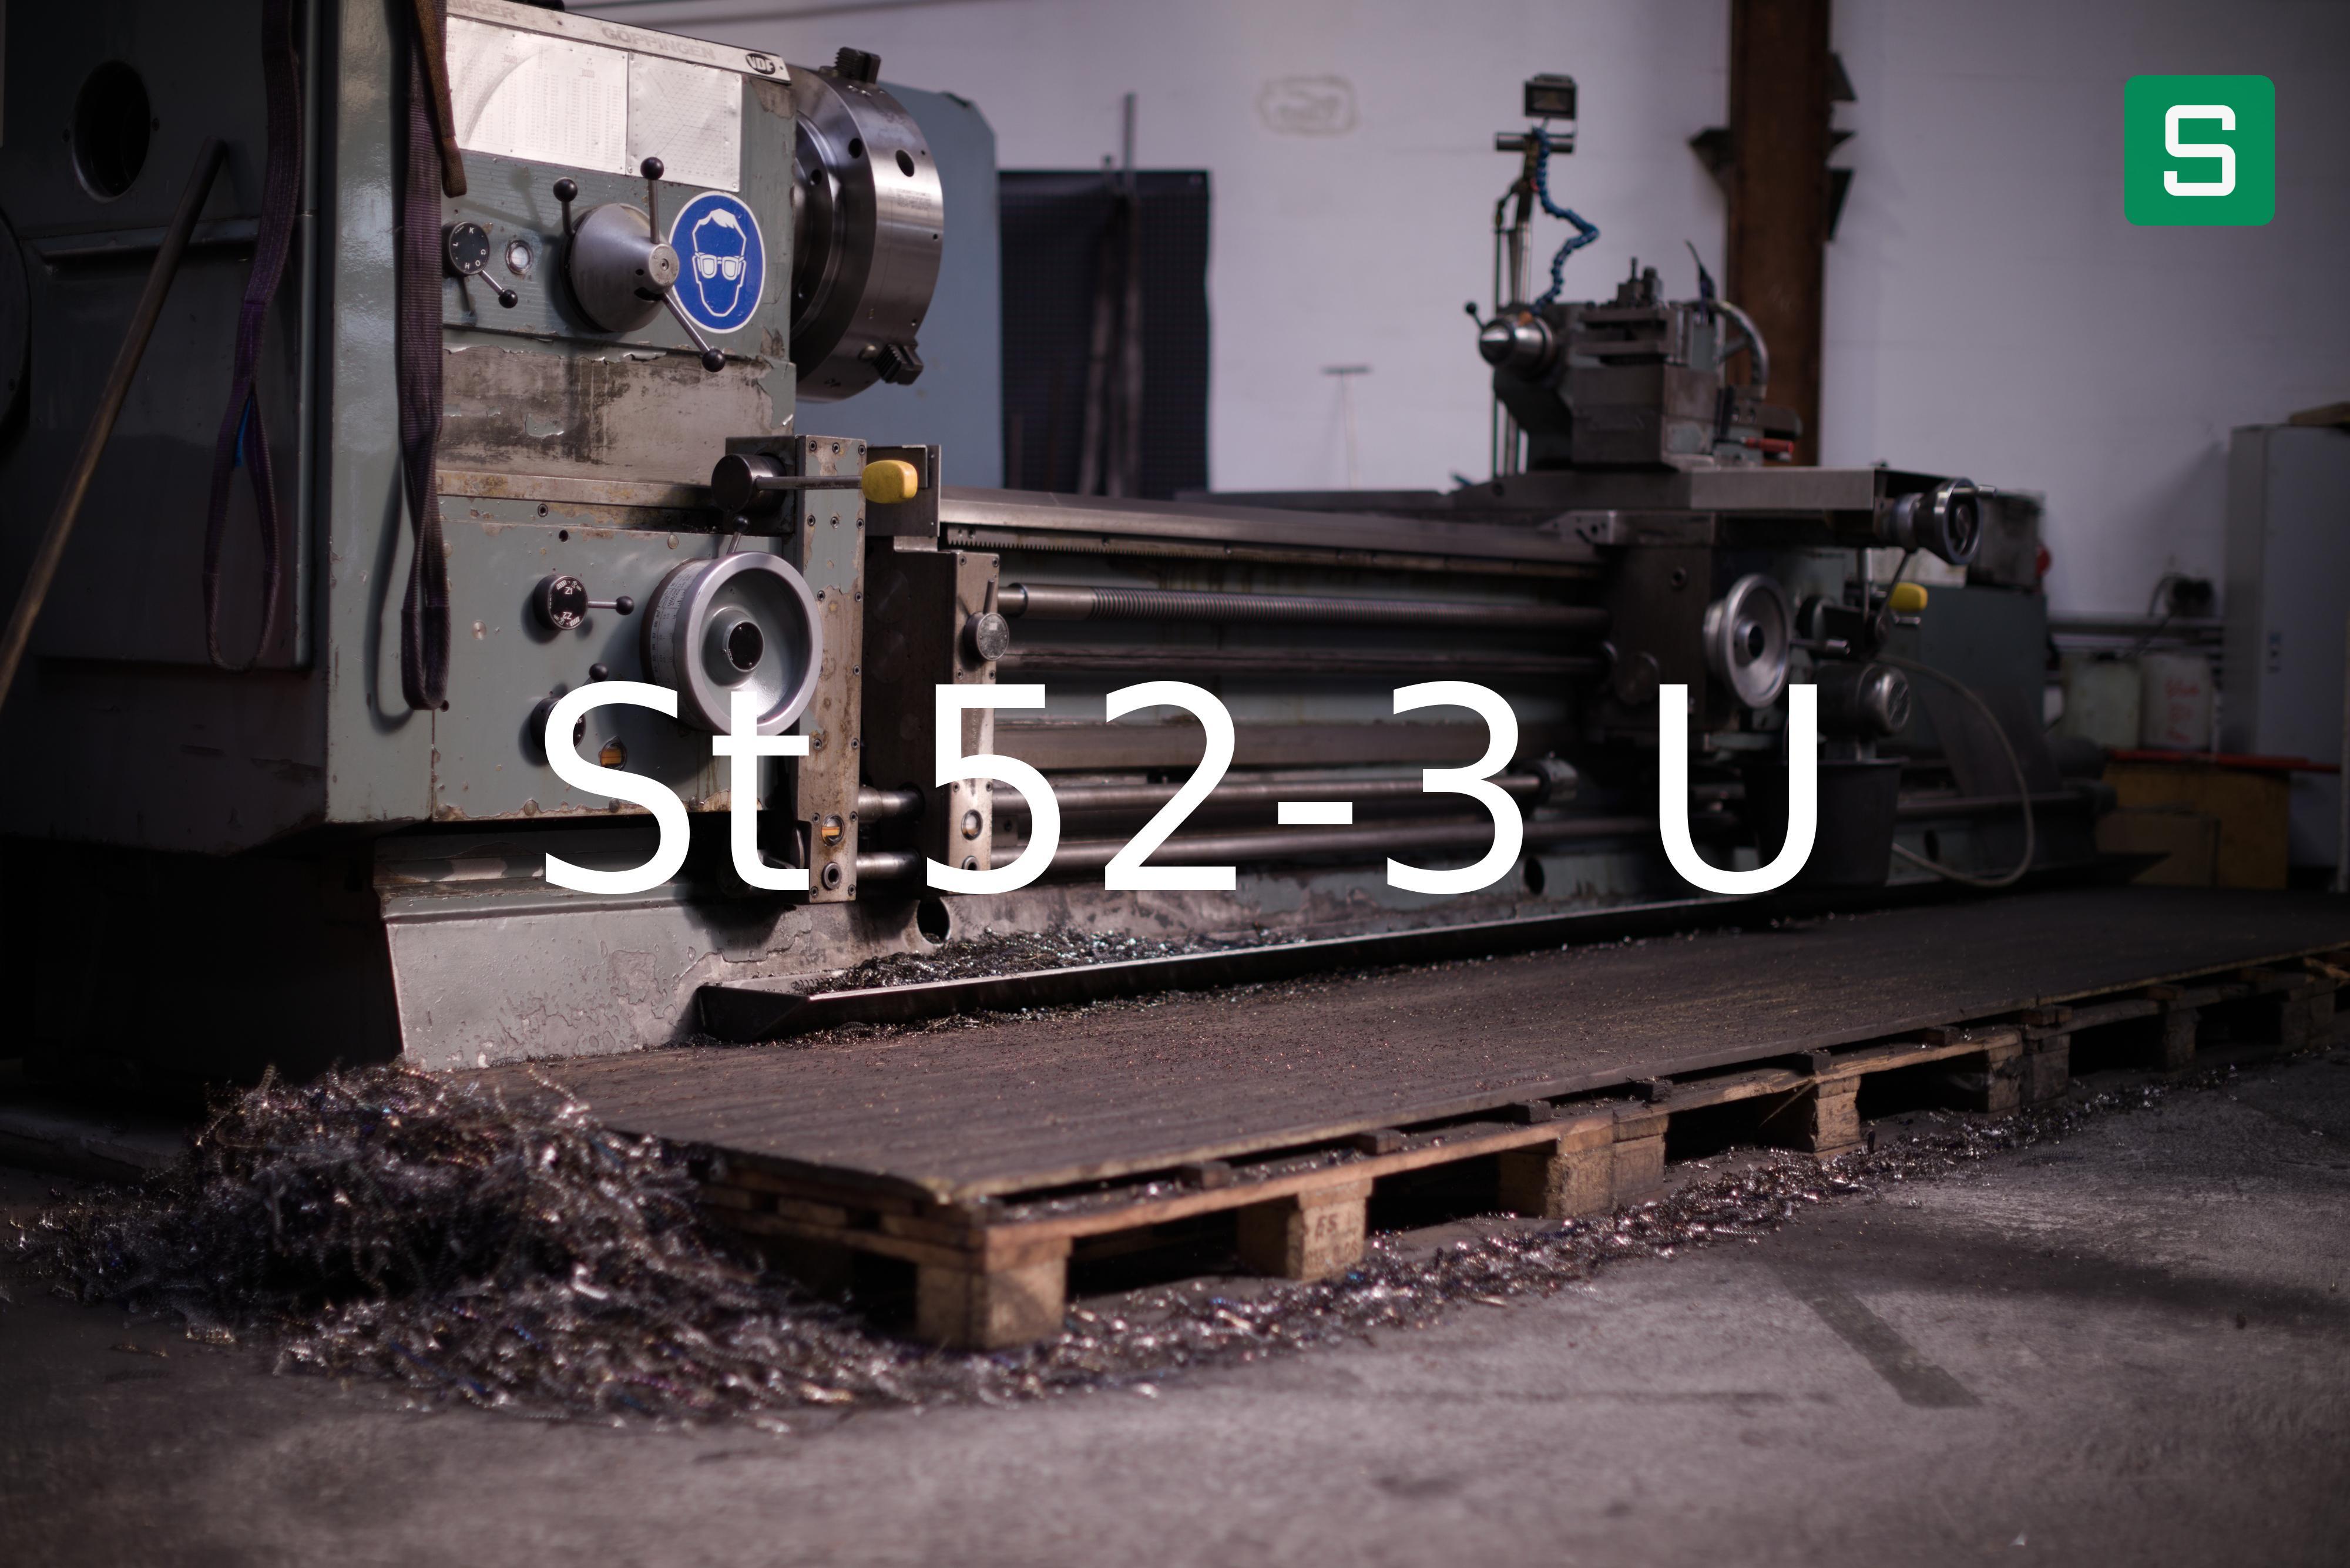 Steel Material: St 52-3 U